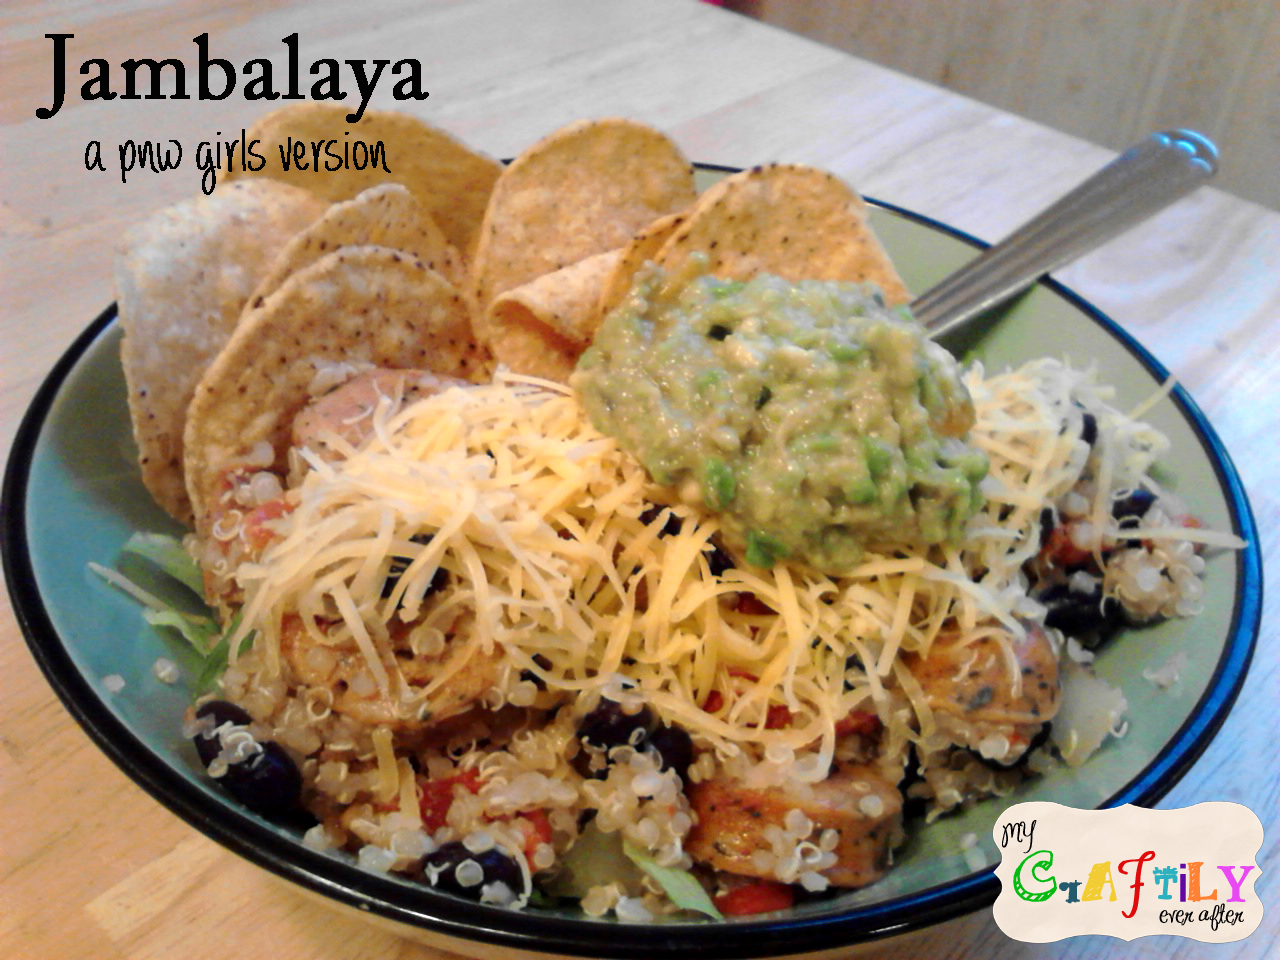 pnw jambalaya with chips and guacamole